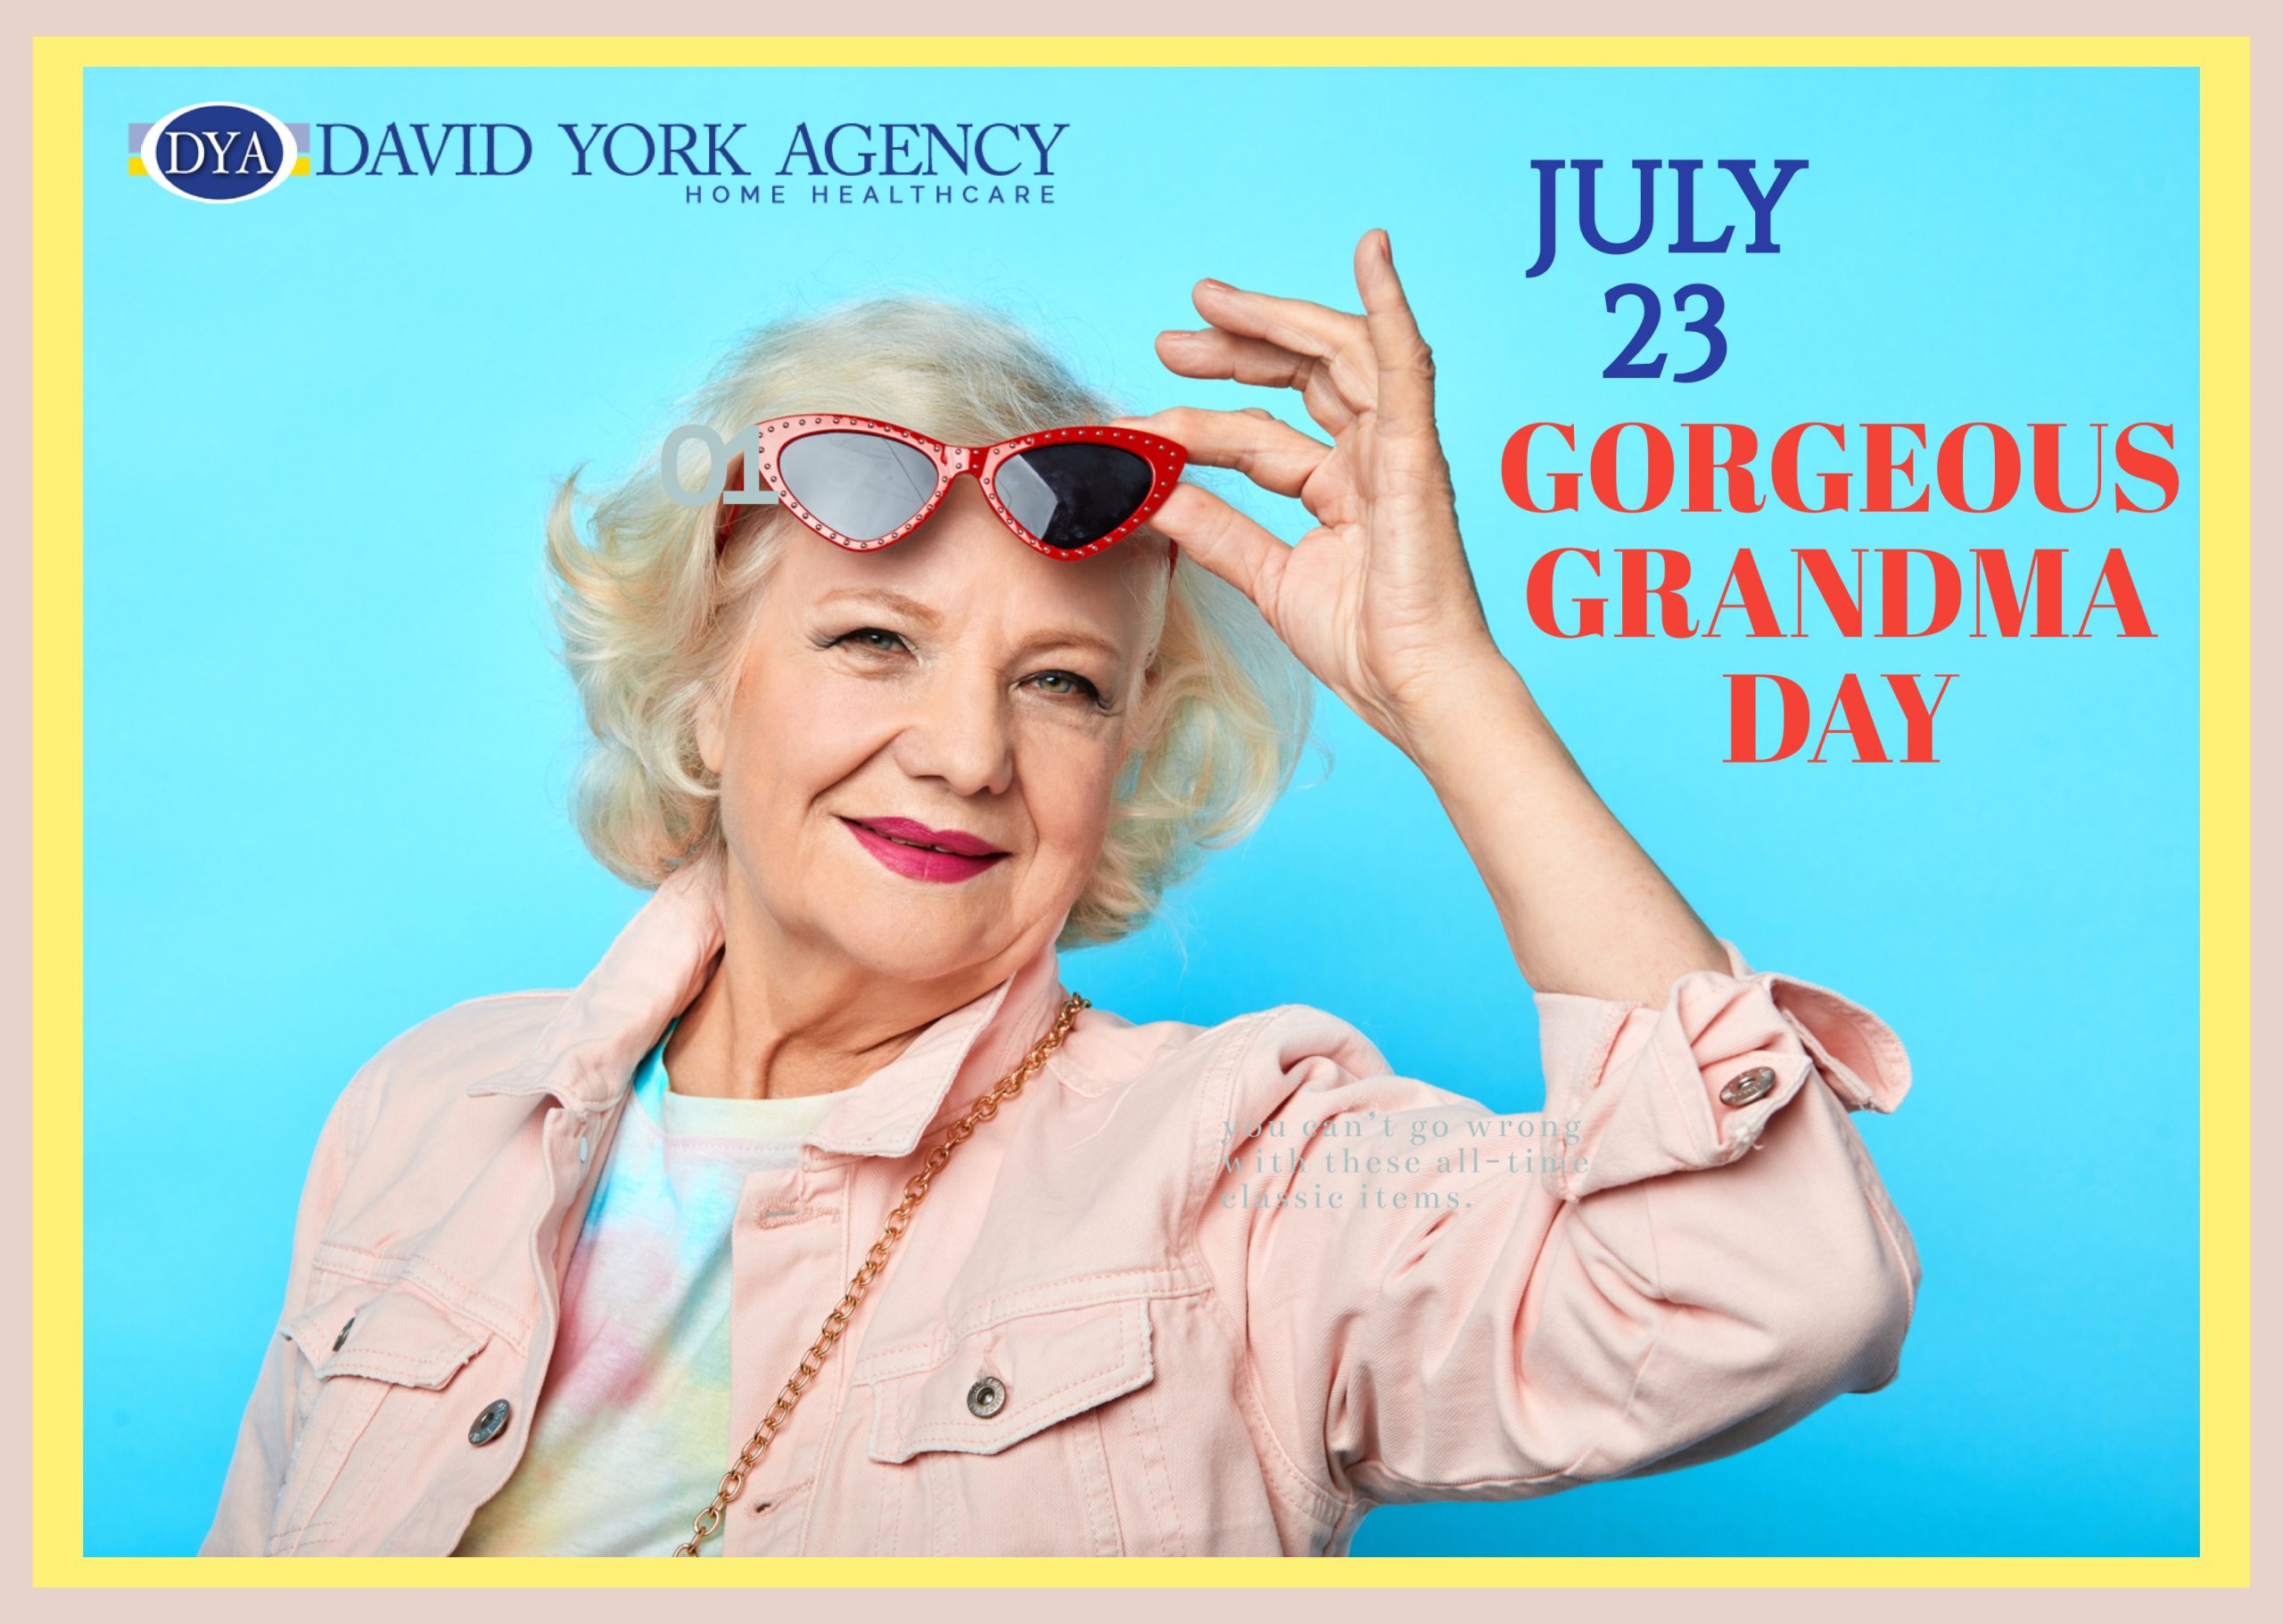 Happy Grandma Day! David York Agency